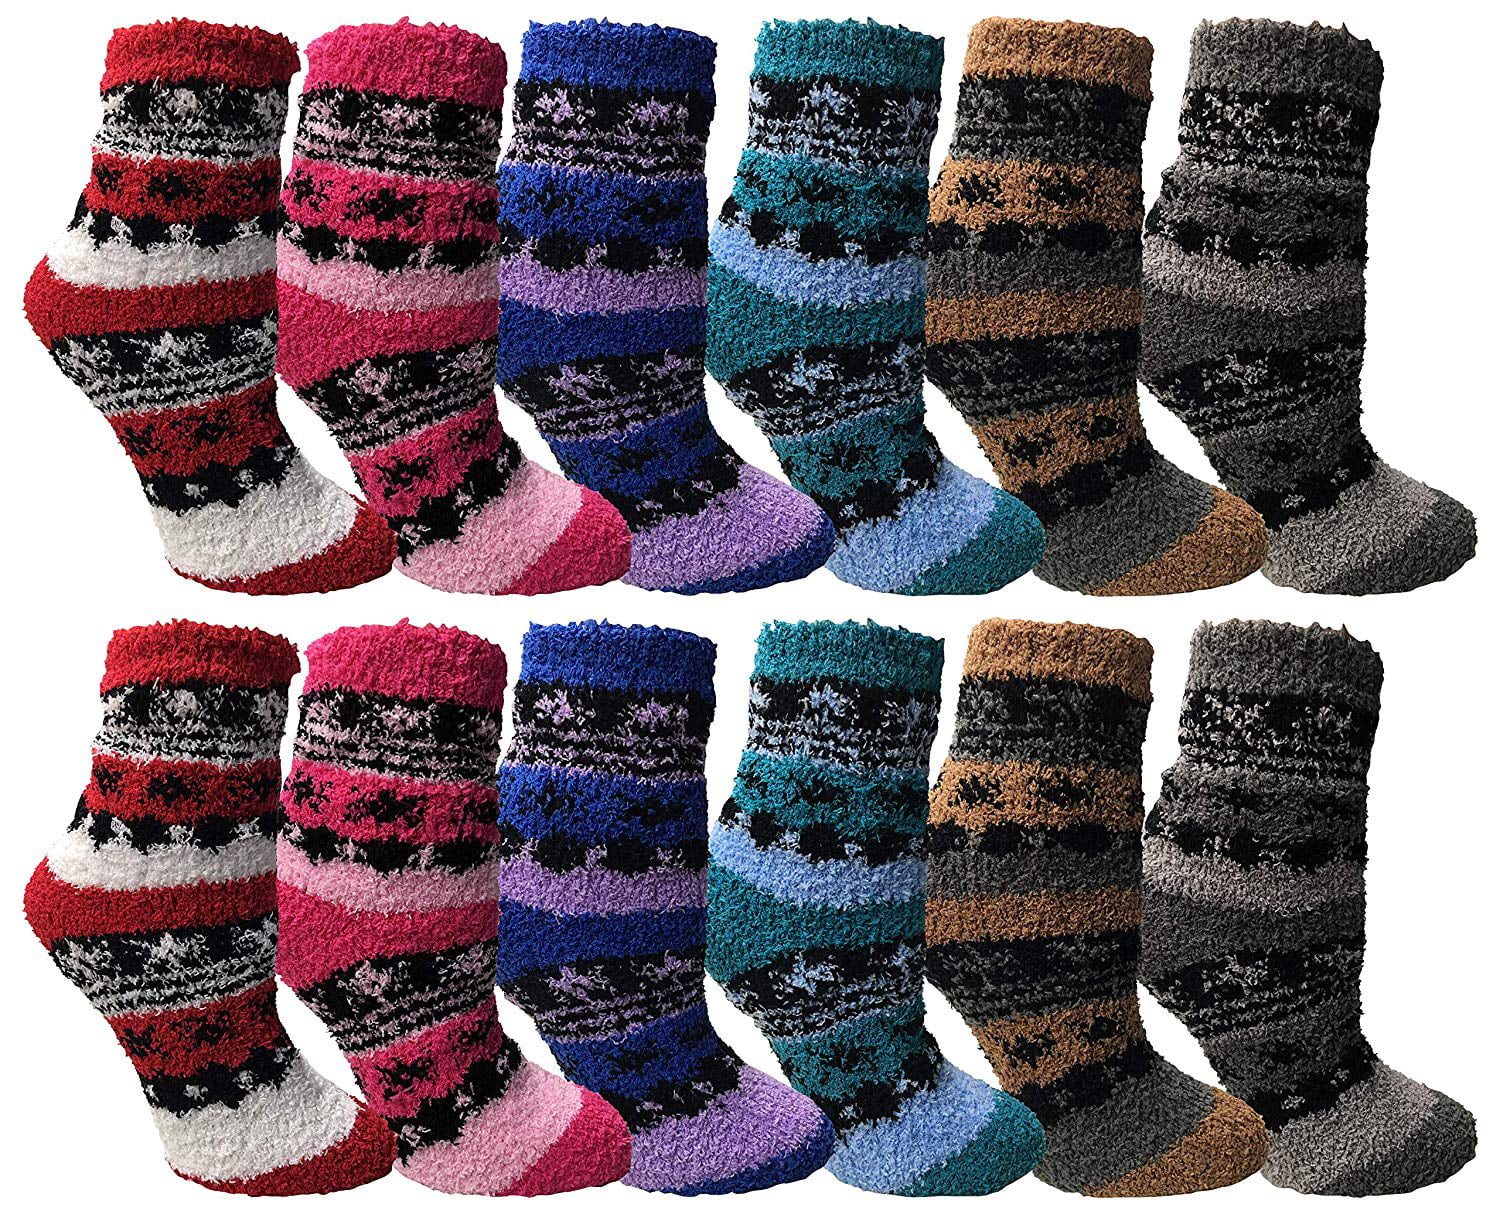 NEW Women's Fuzzy Fluffy Socks sz 9-11 6 Colors by Yacht & Smith NEW